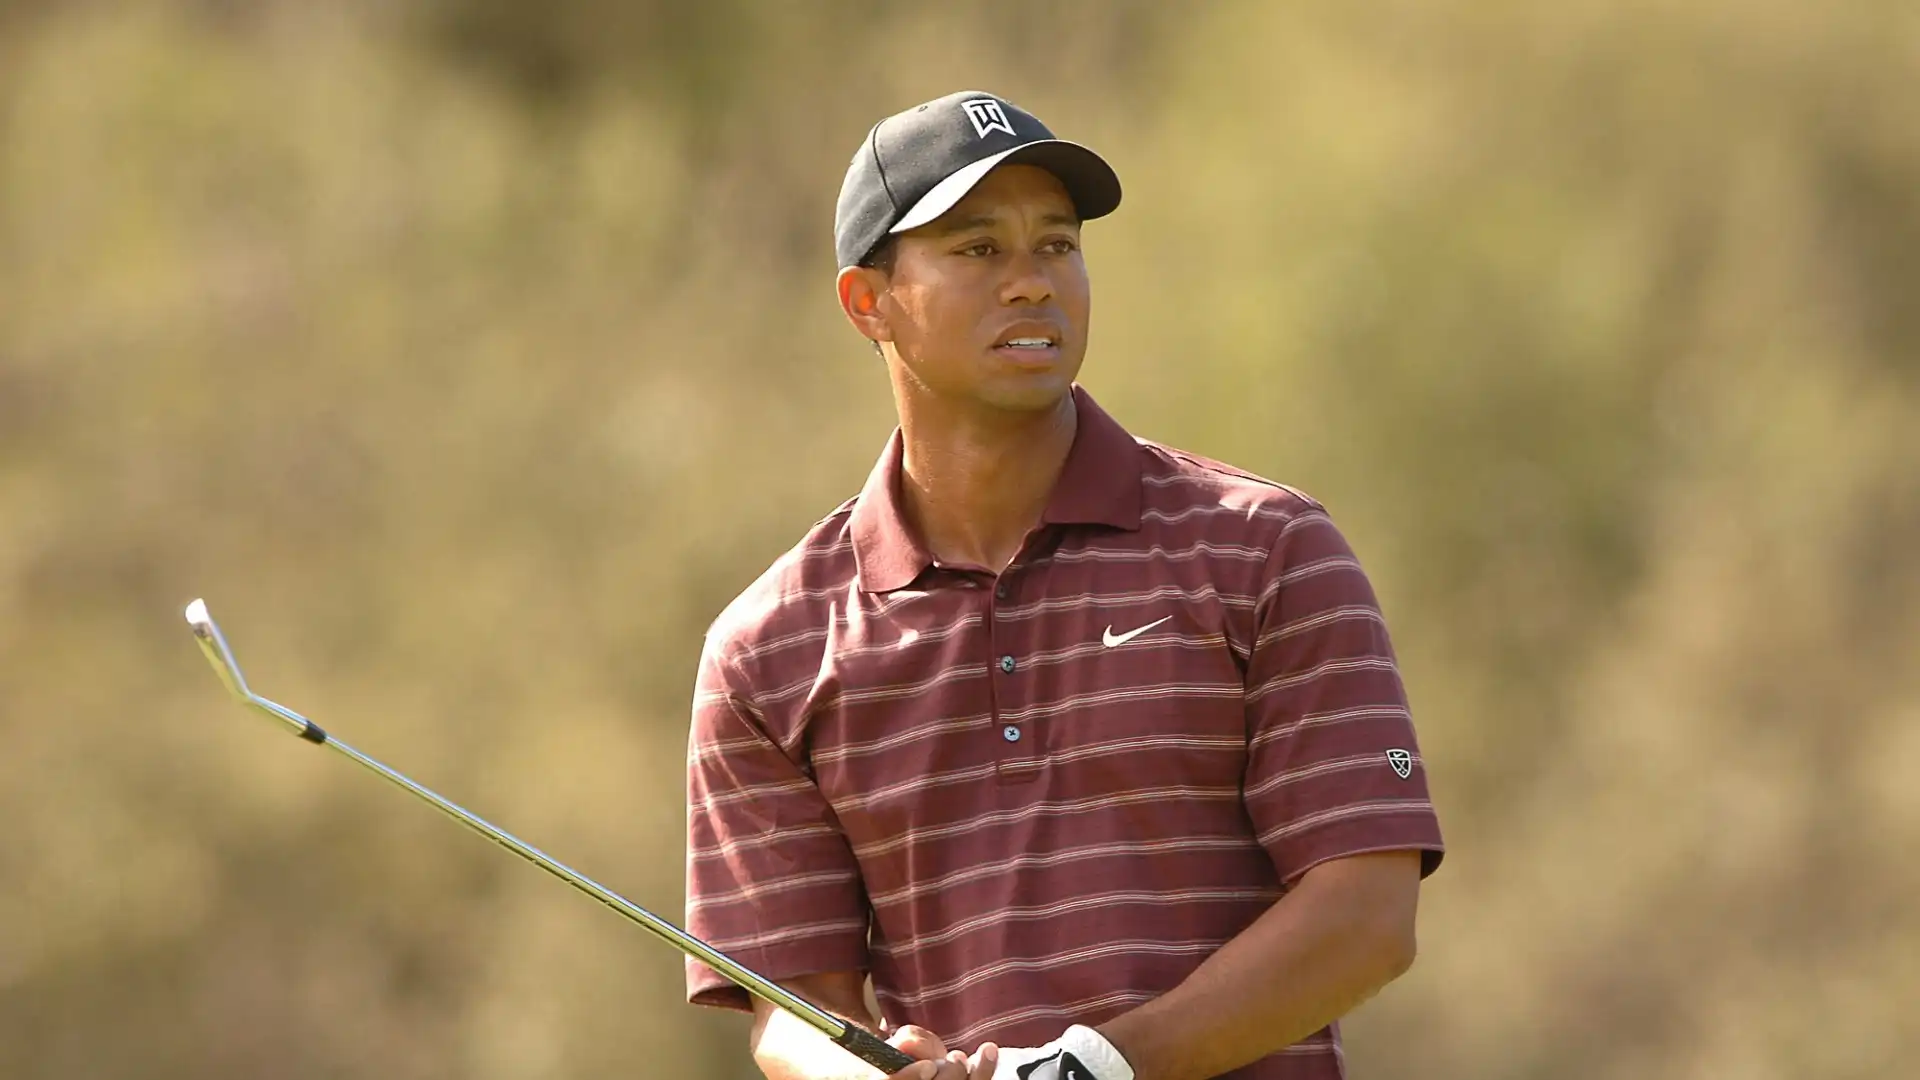 2005: Tiger Woods (Golf), guadagni totali stimati 87 milioni di dollari